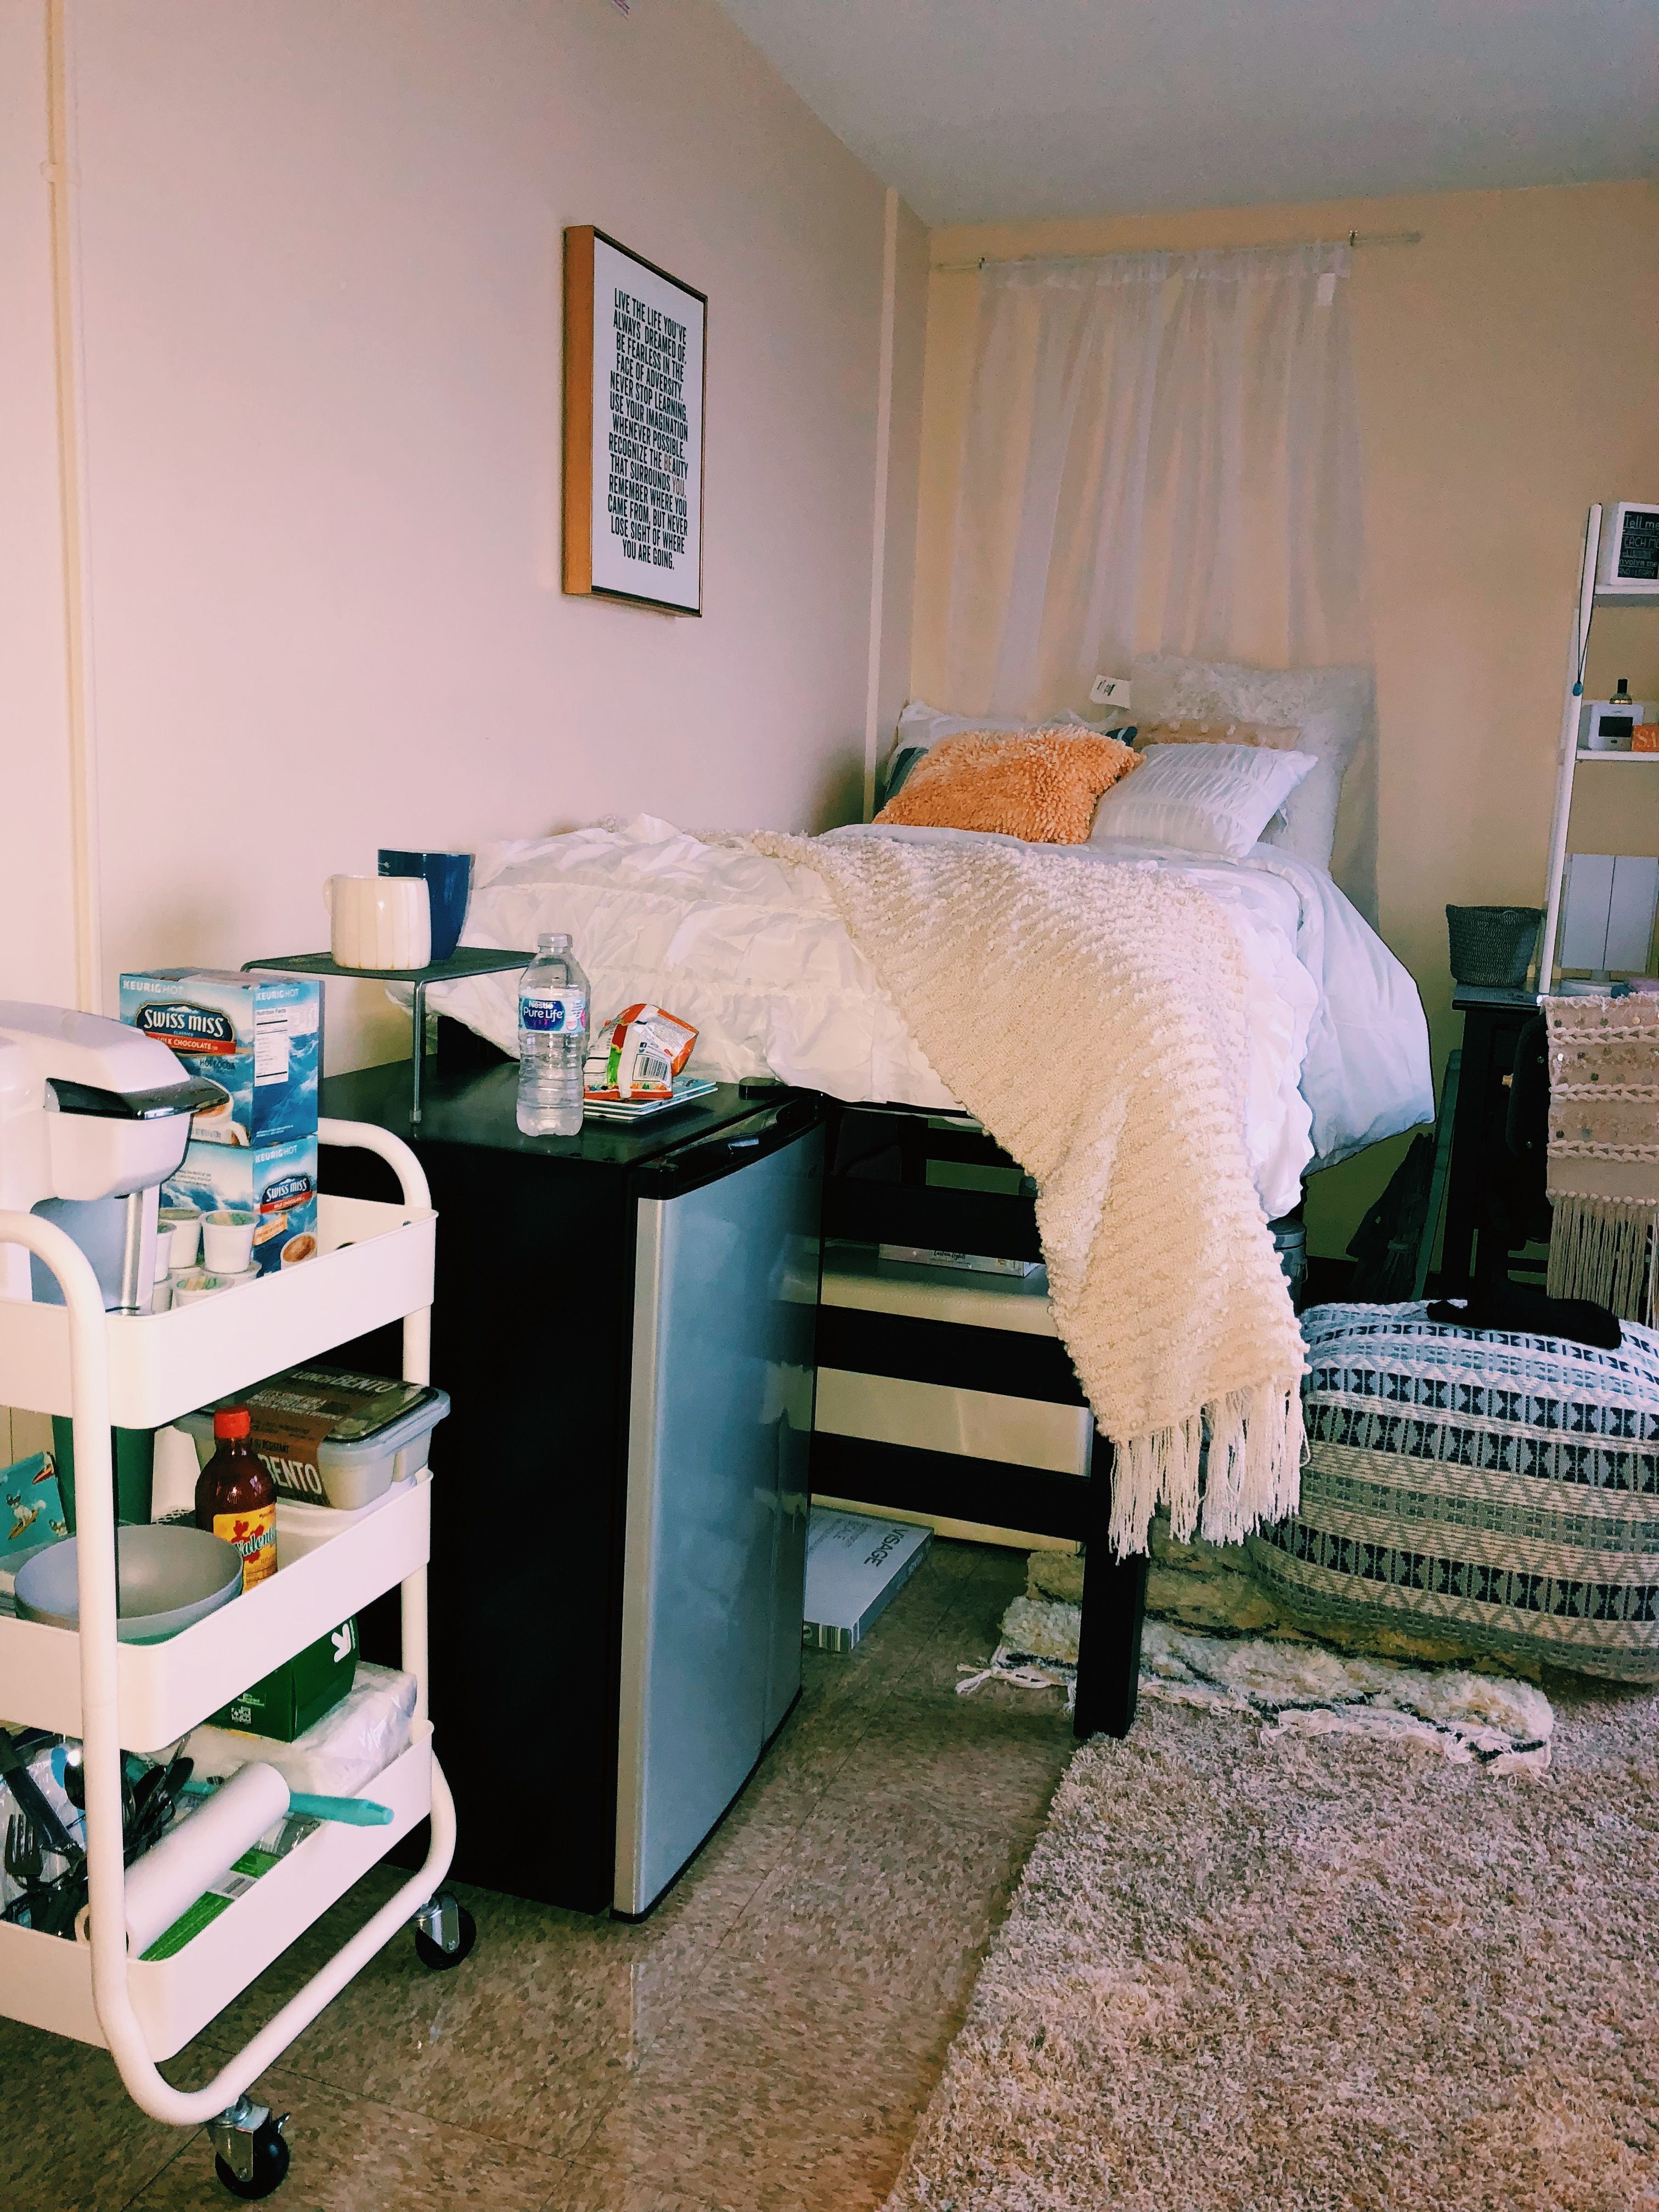 Dorm room at Illinois state university -   20 minimalist decor dorm
 ideas